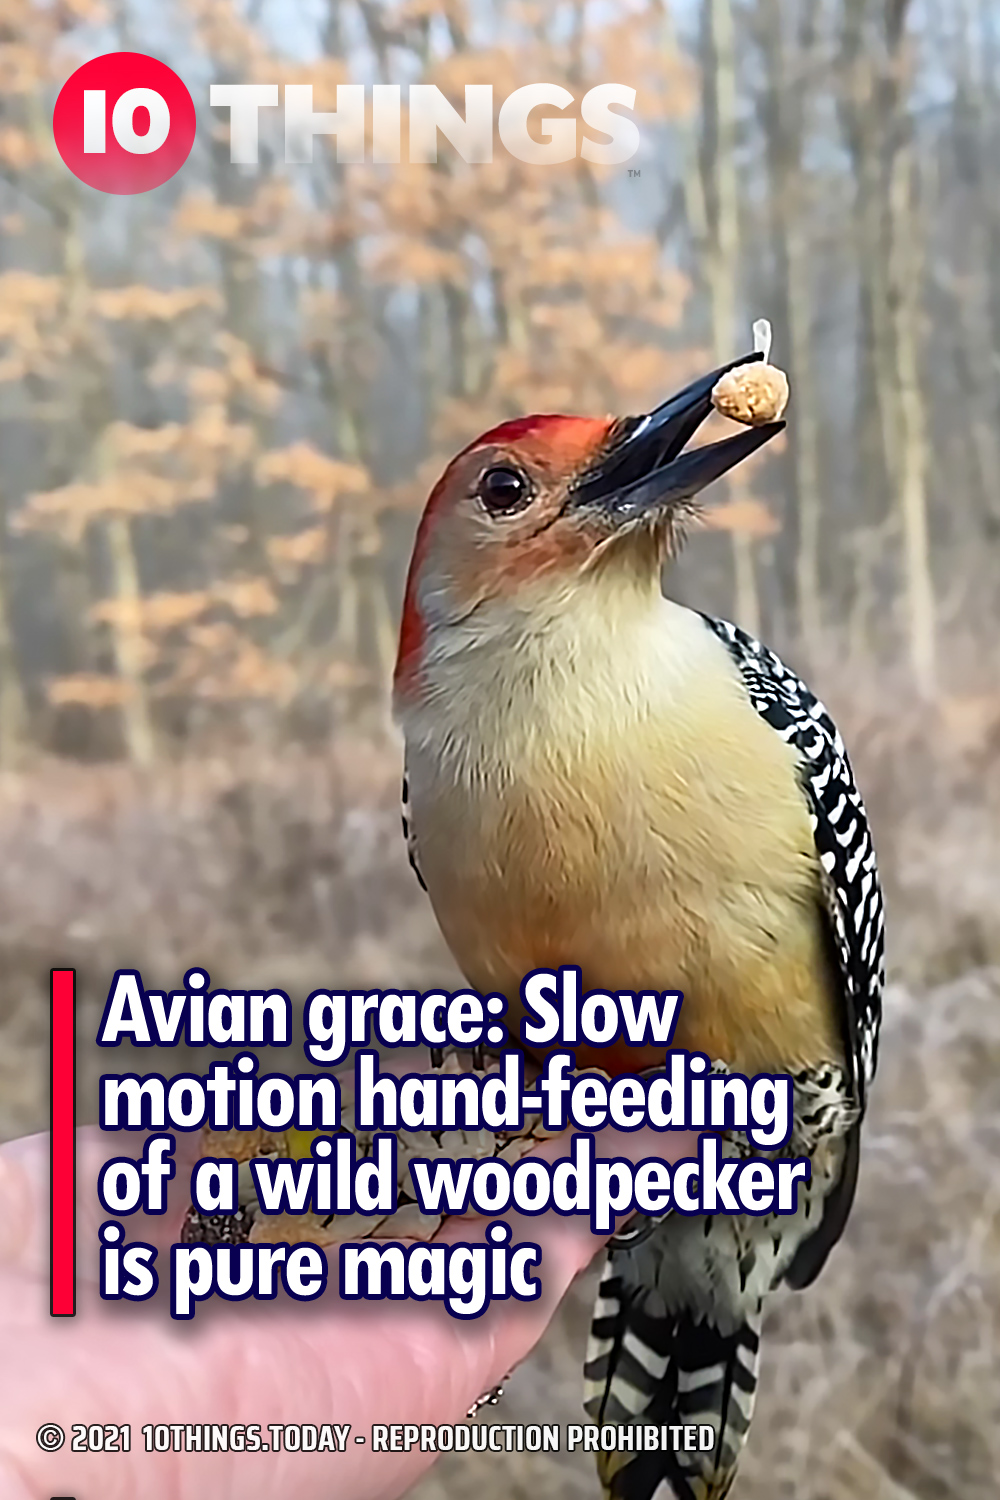 Avian grace: Slow motion hand-feeding of a wild woodpecker is pure magic